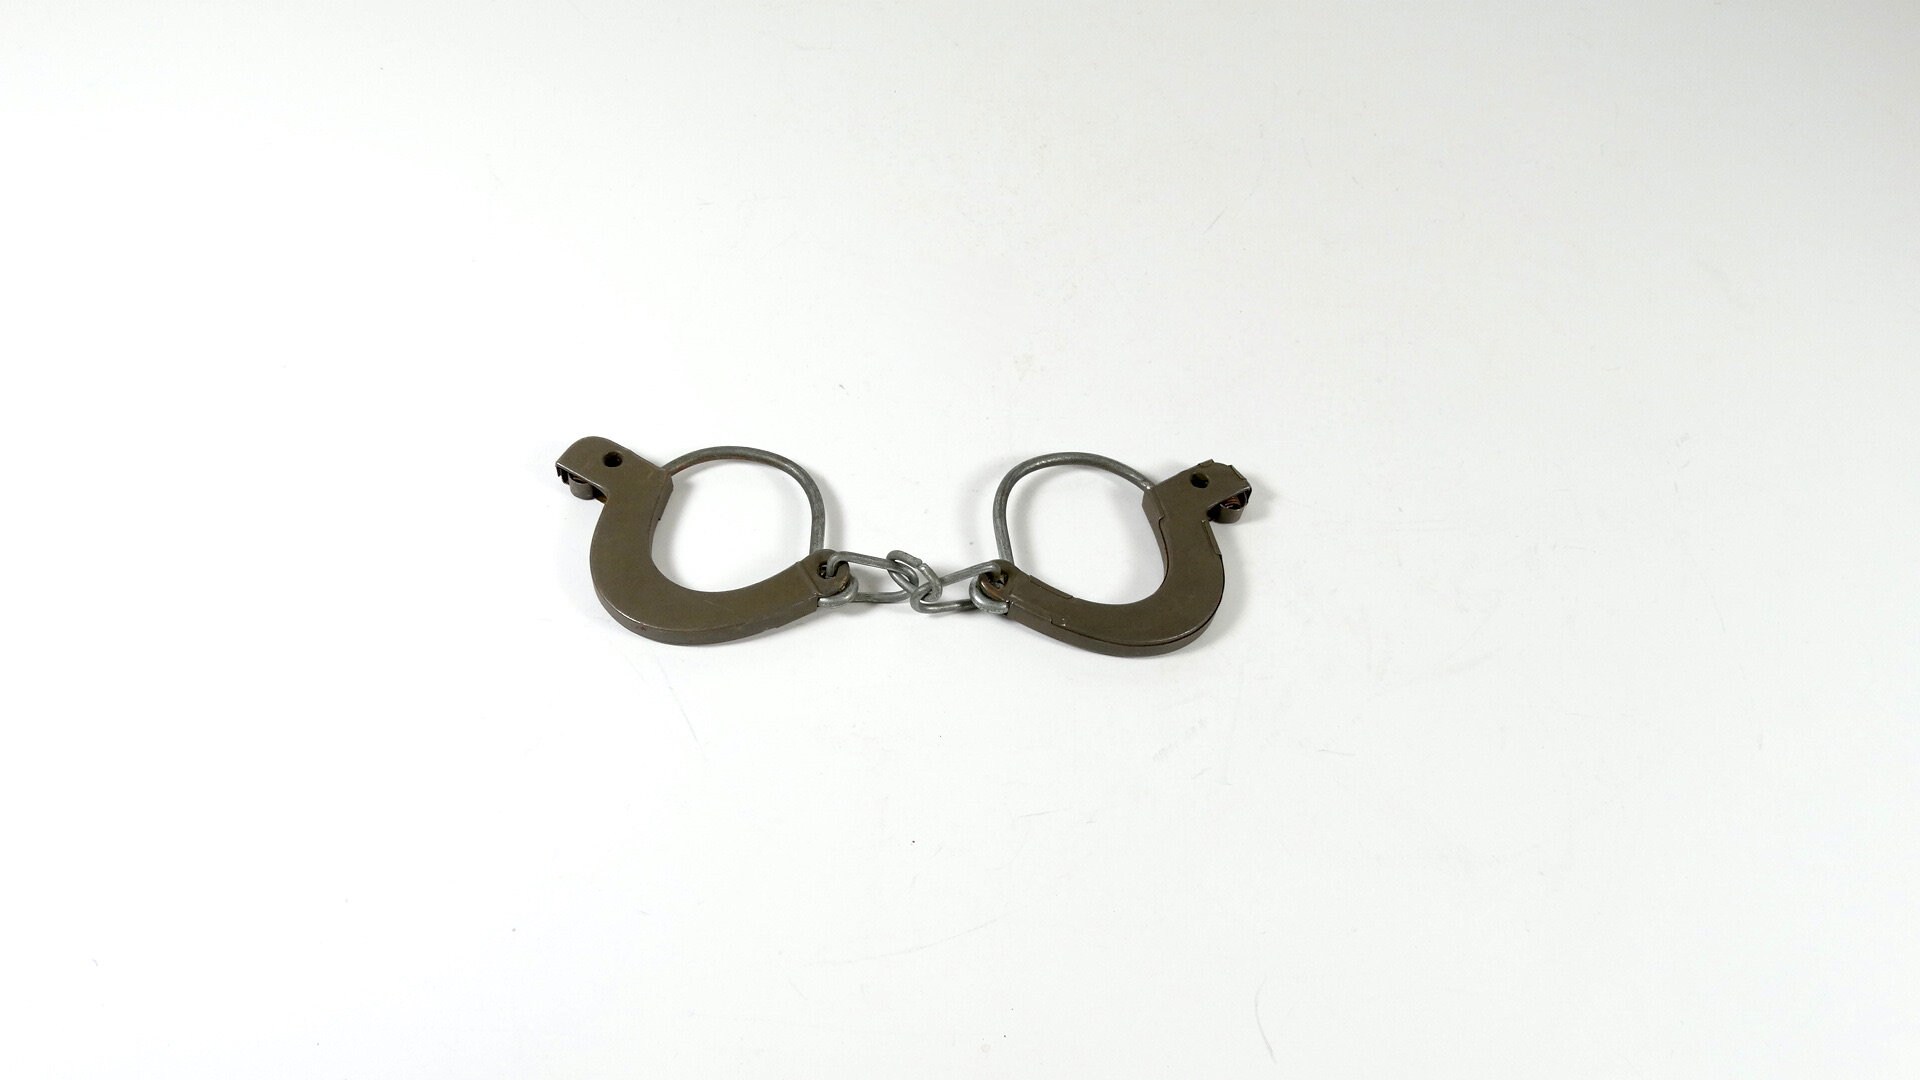 Small Vintage Handcuff Key Vintage Key for Handcuffs Vintage Hollow Barrel  Key Charm Steampunk Key Rustic Skeleton Key 